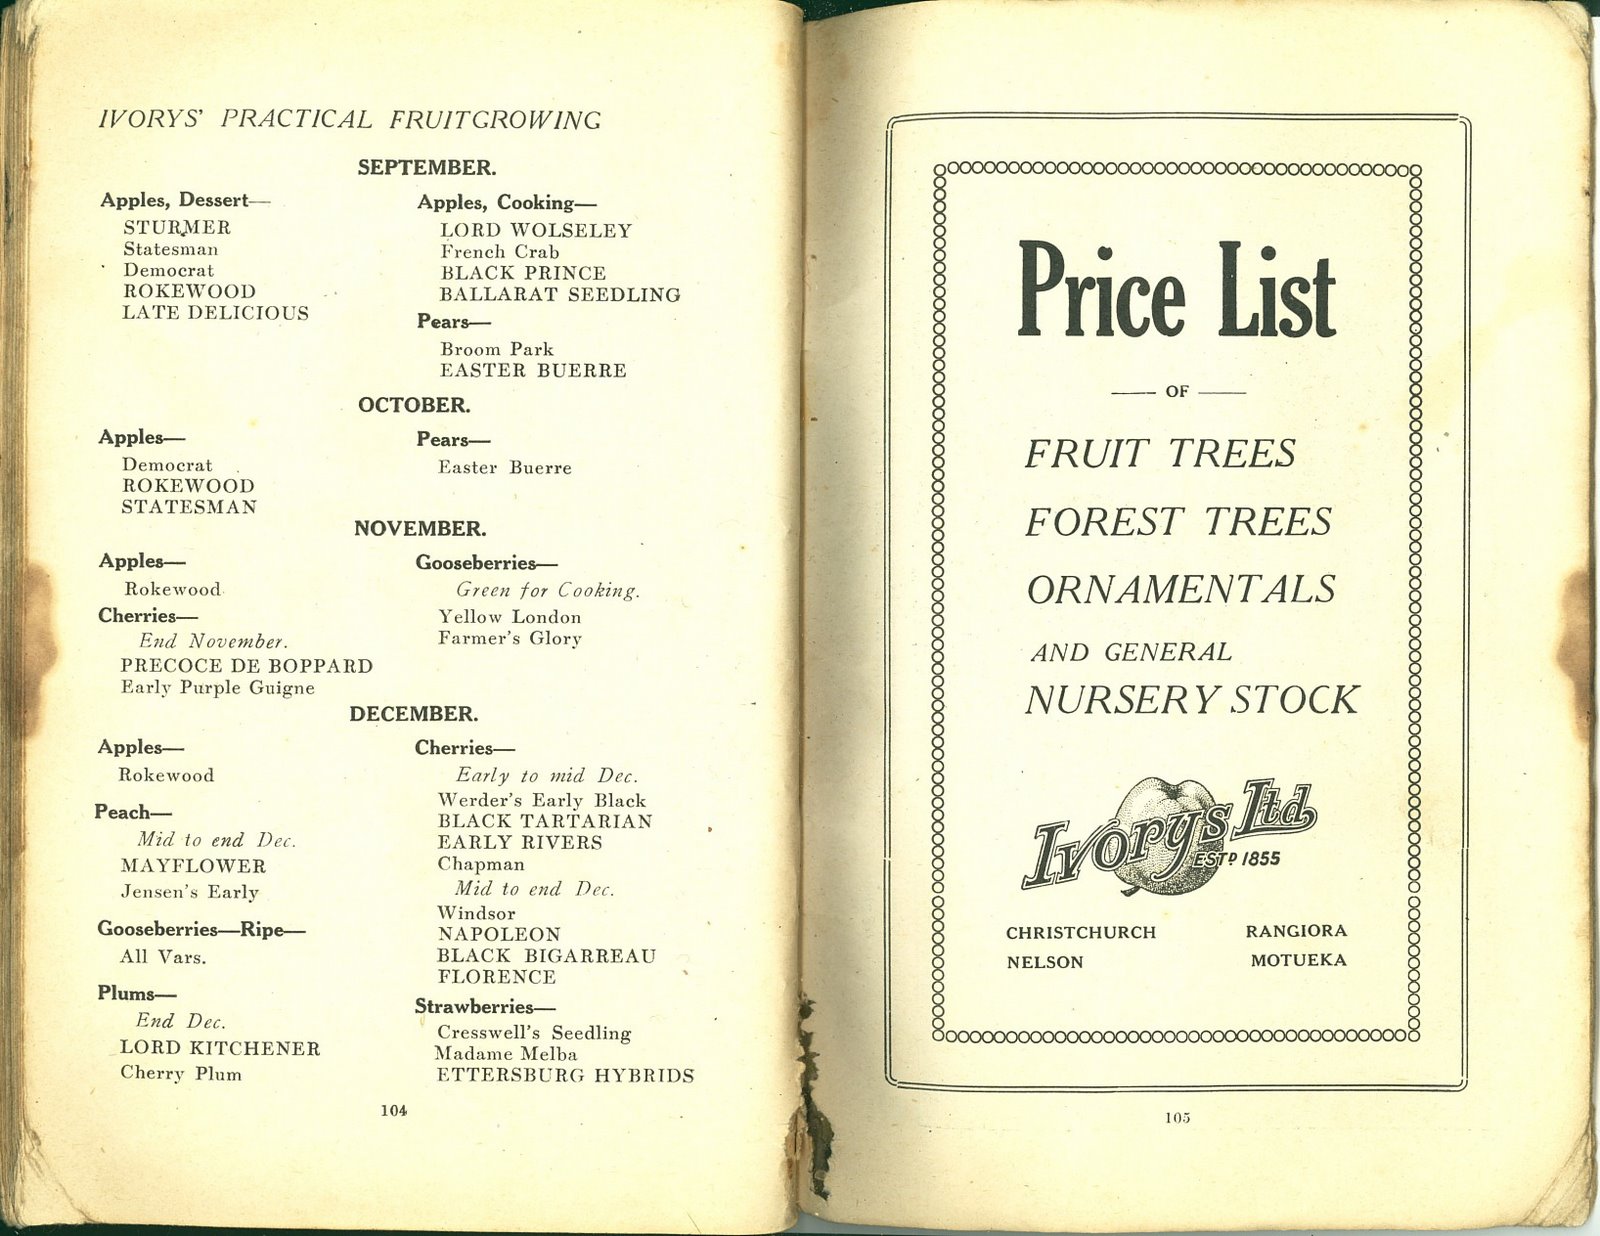 [1922xxxx+Brochure+Ivorys'+Practical+Fruit+Growing+Pg+104+105.jpg]